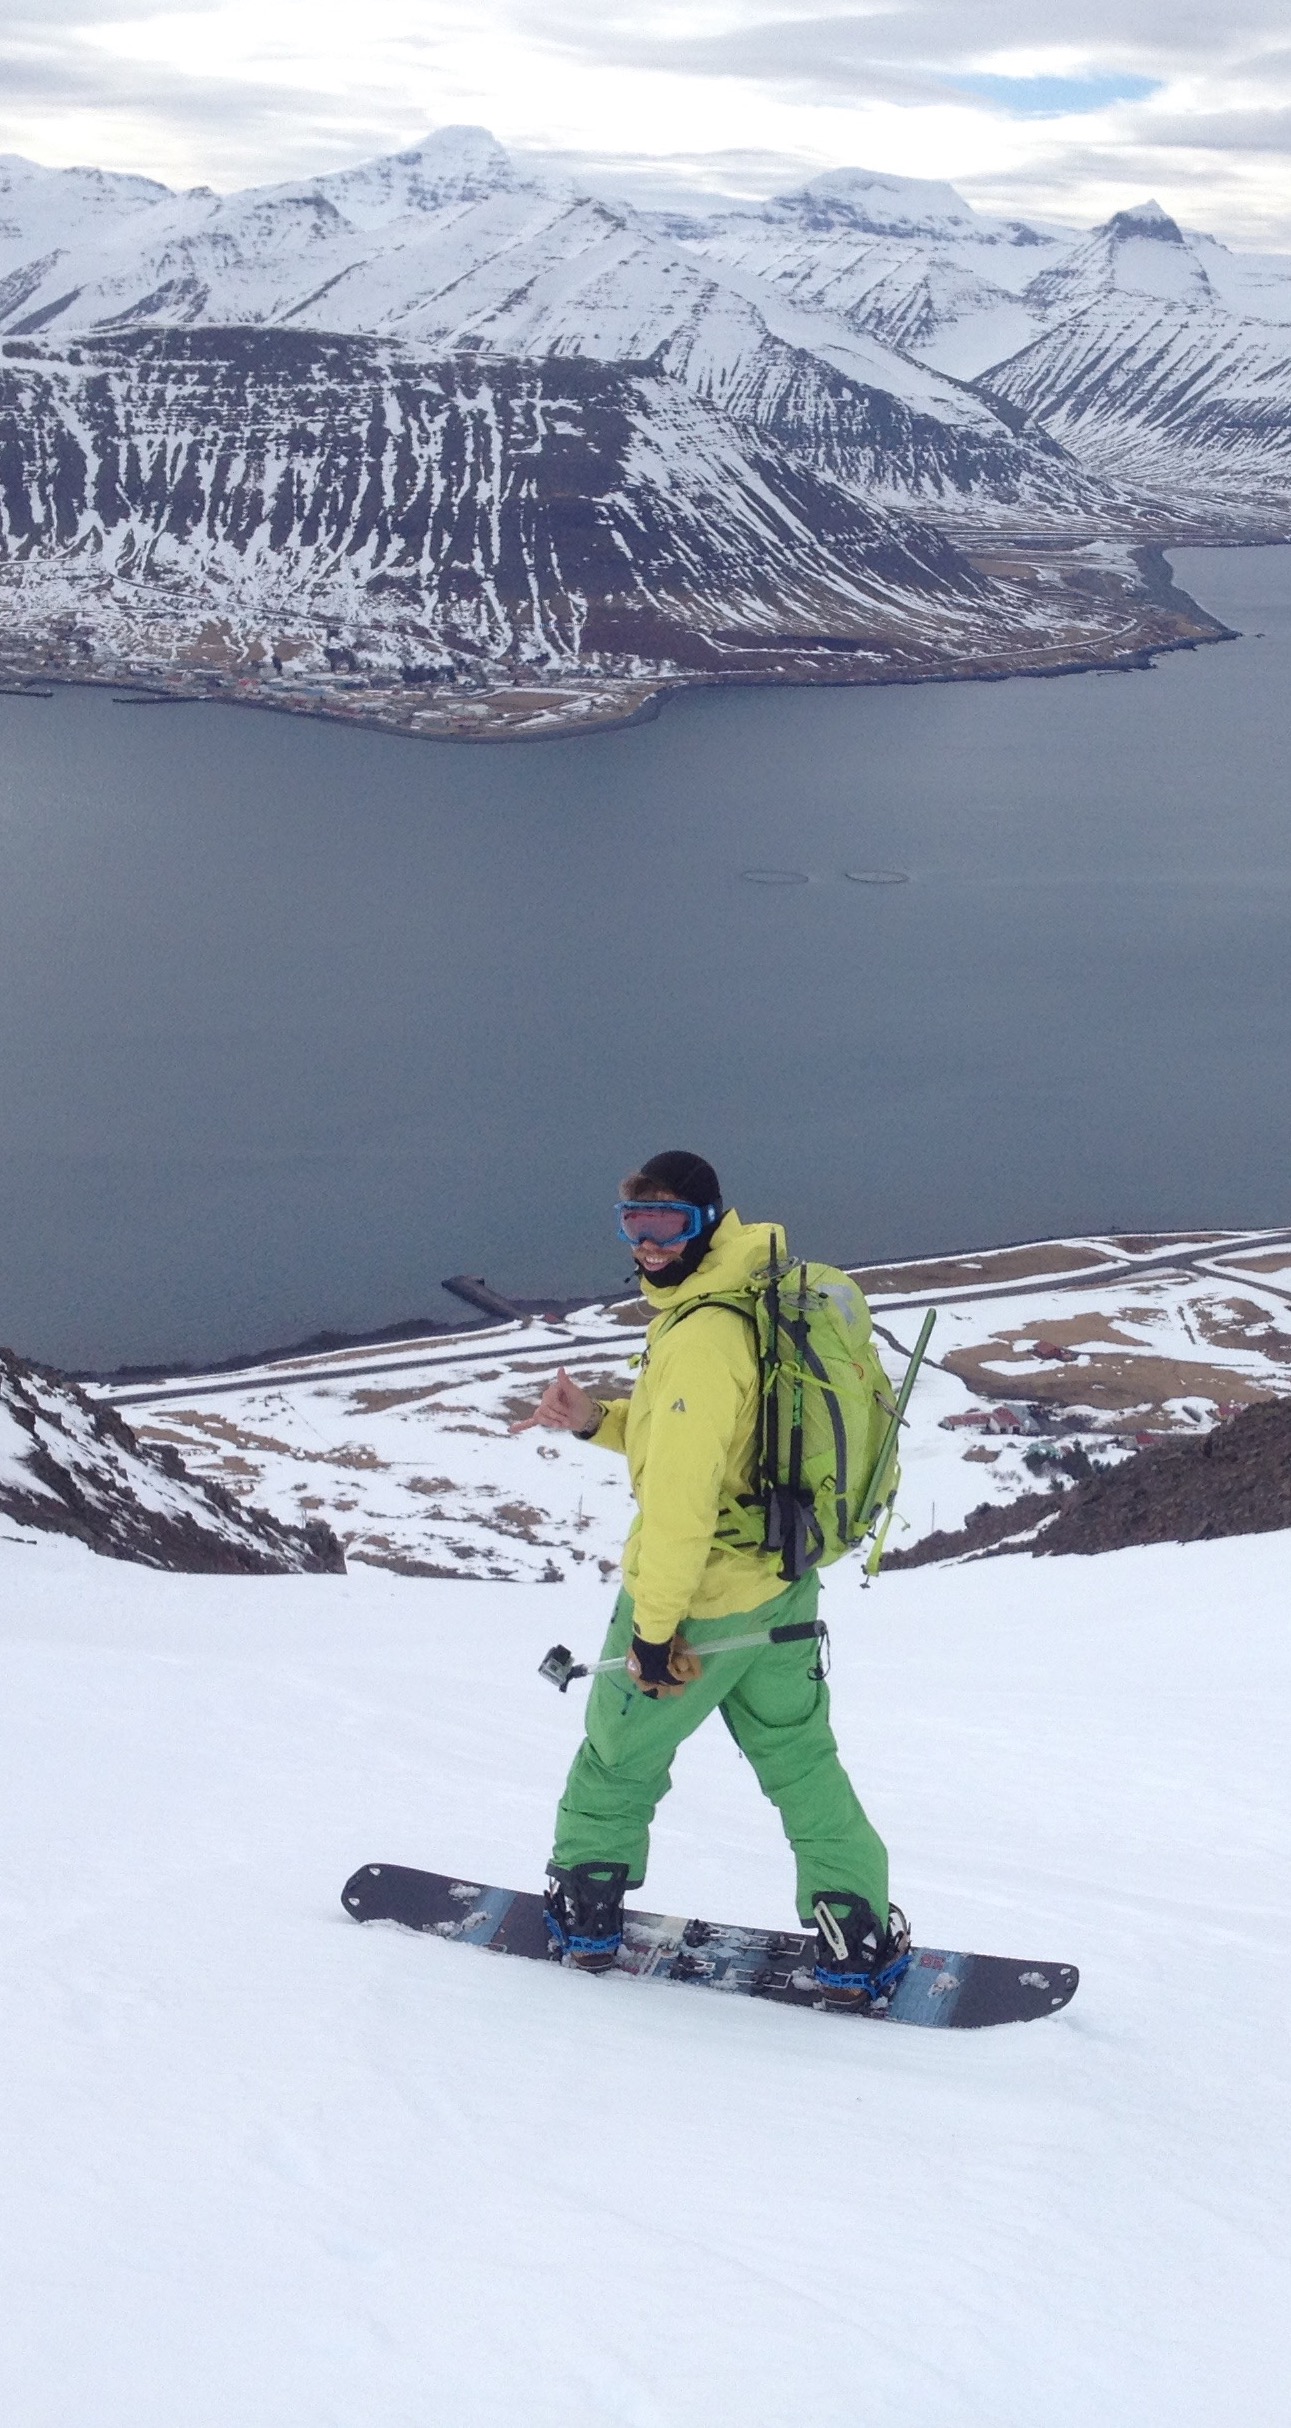 Getting ready to snowboard with Dýrafjörður in the distance